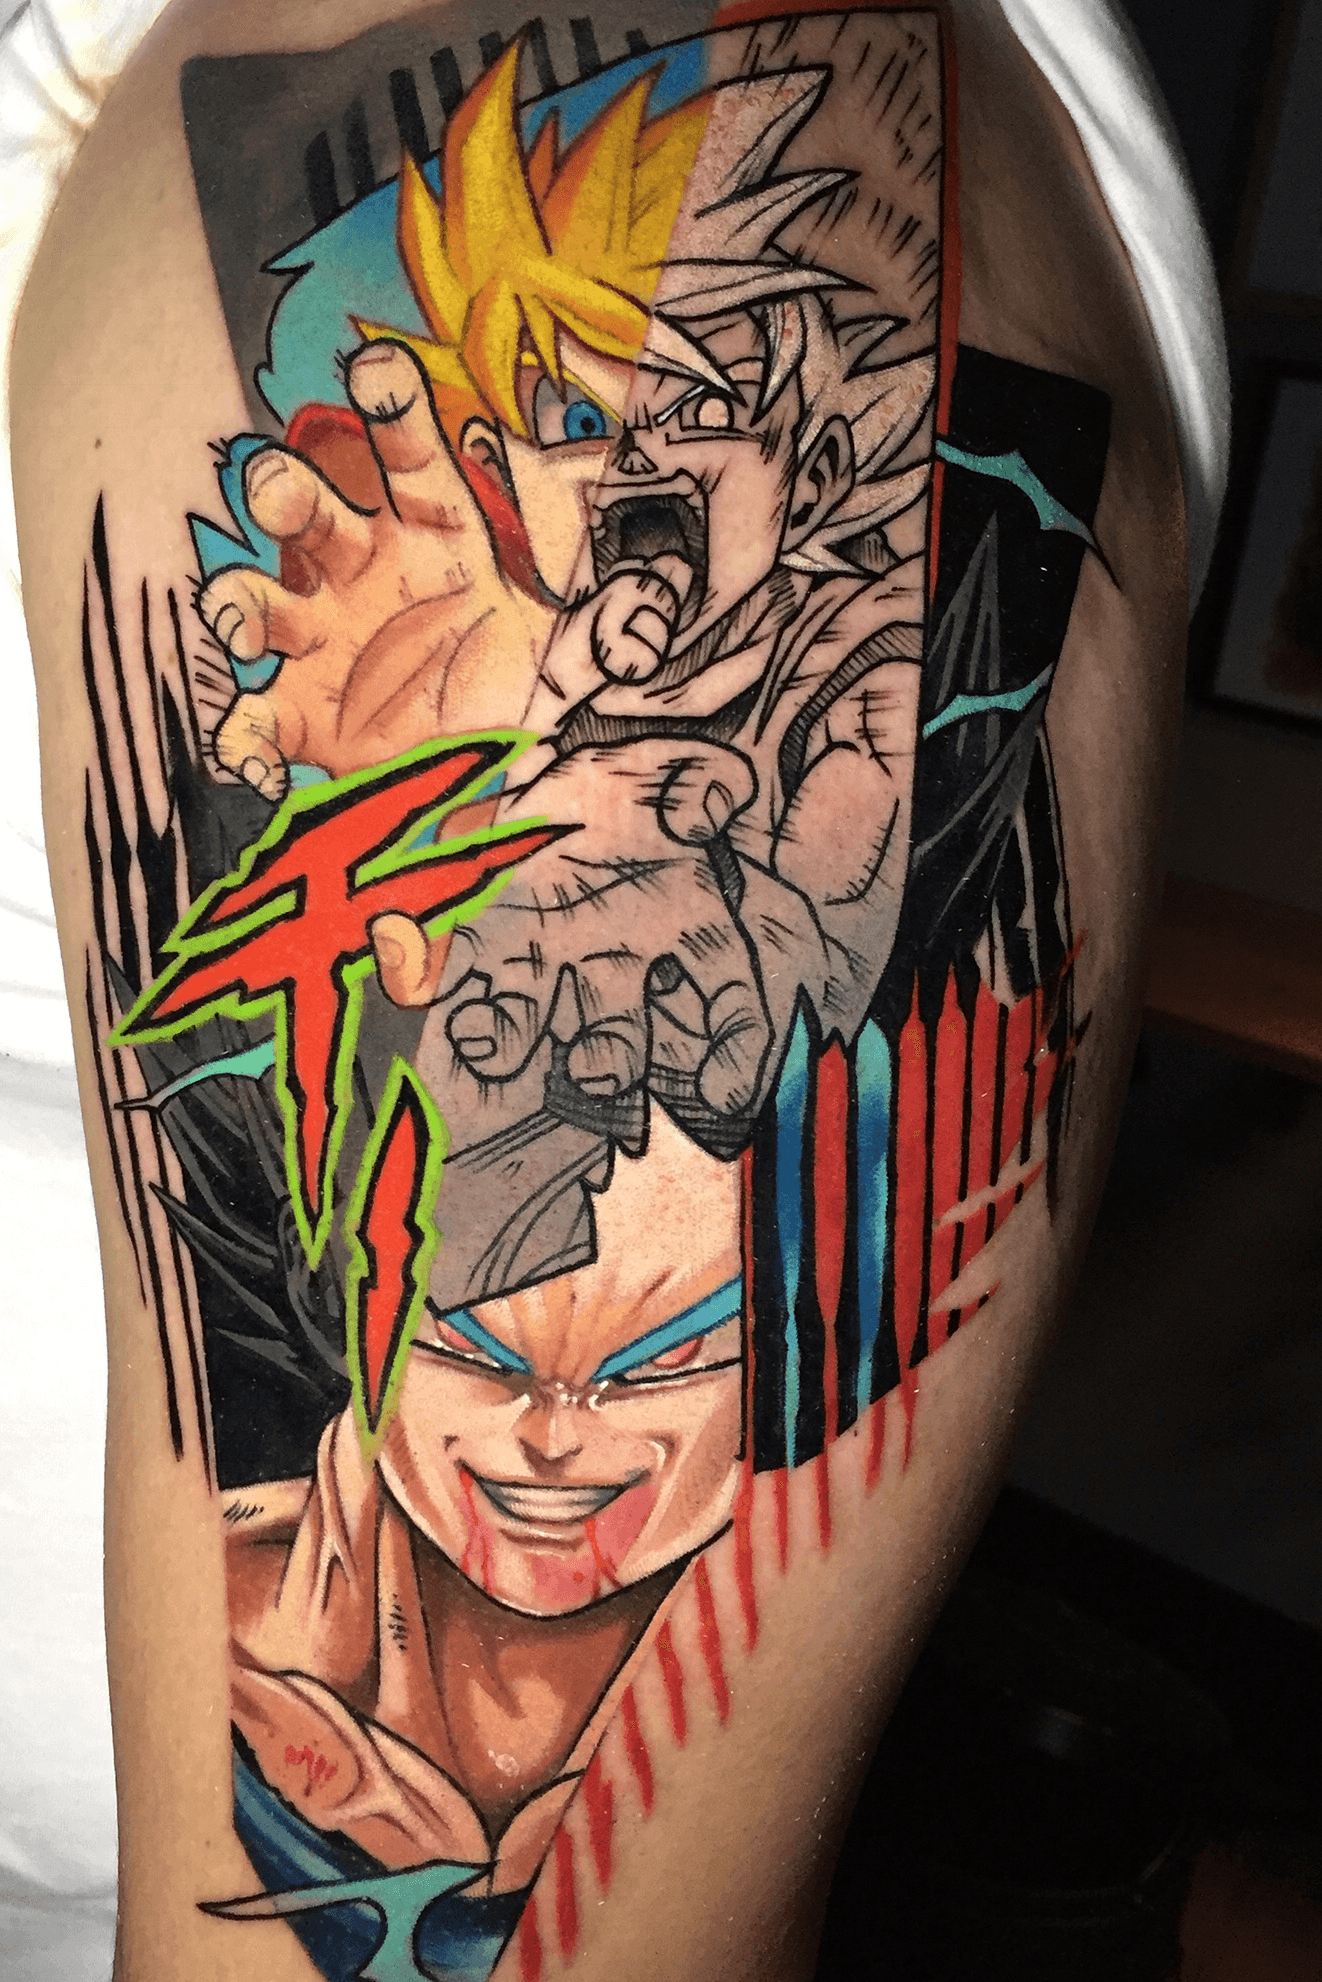 SSJ3 Goku tattoo by hippykillermothrfckr on DeviantArt